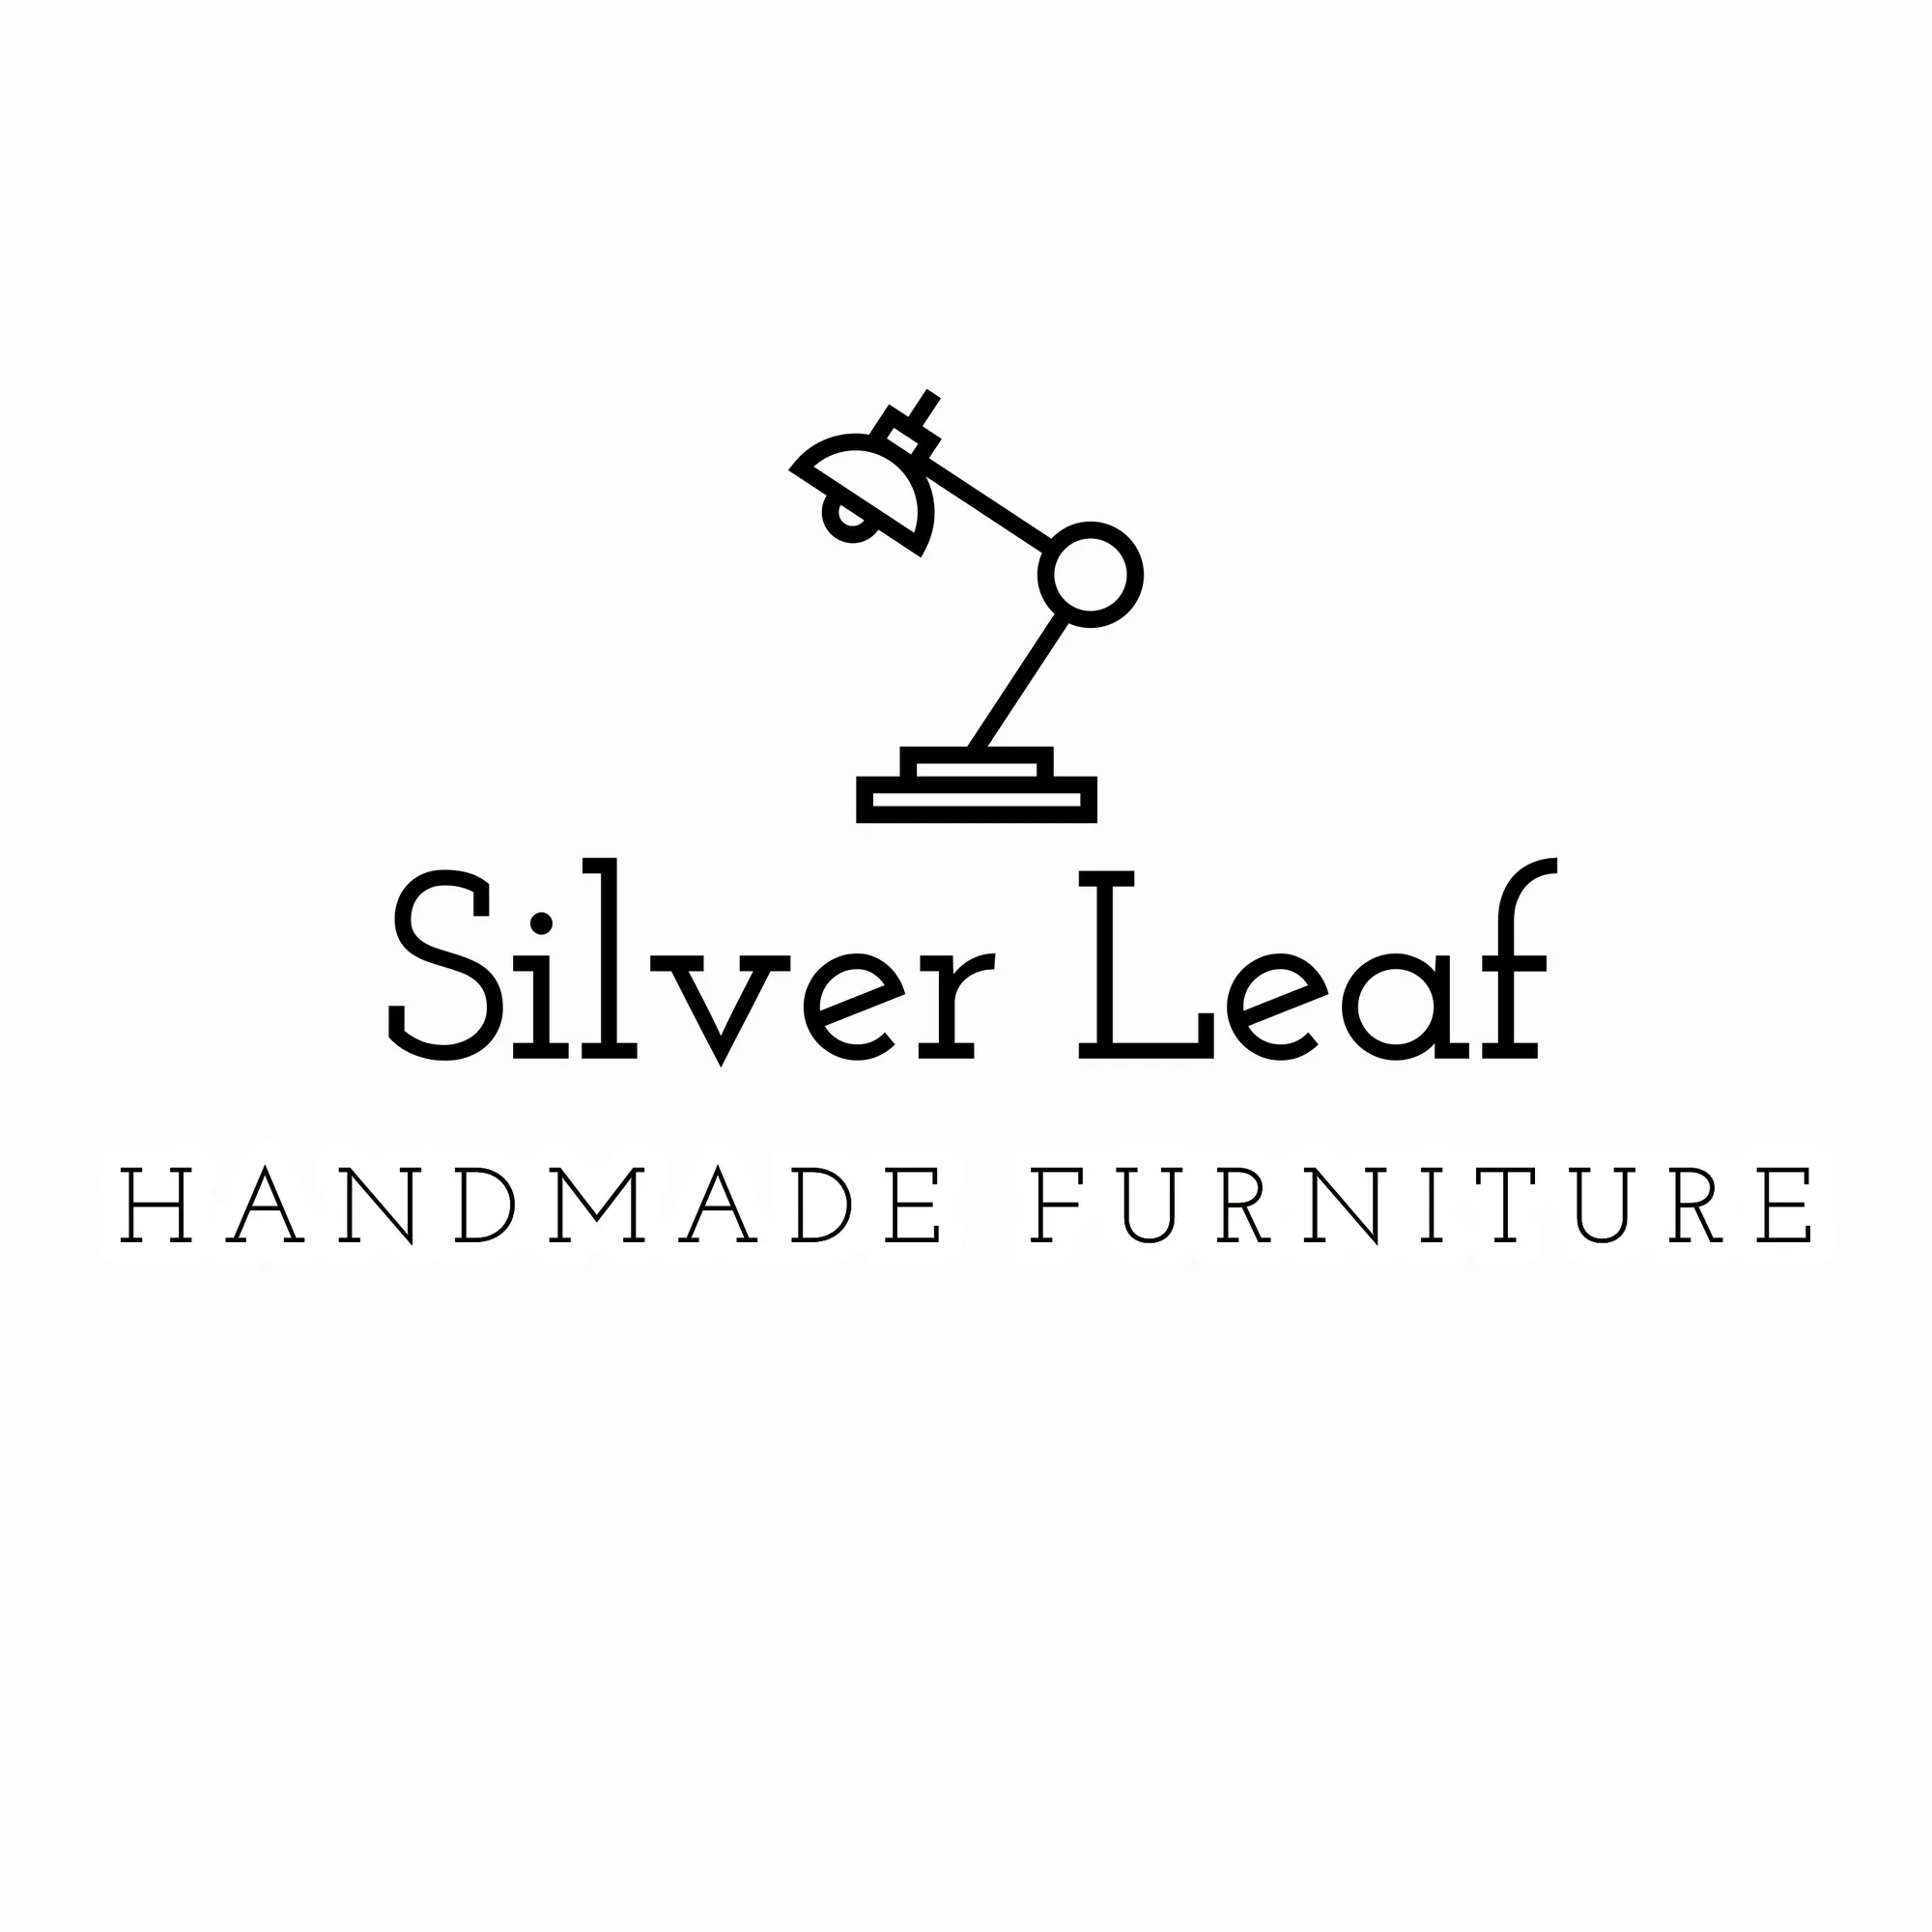 White Black Lamp Silver Leaf Furniture Logo